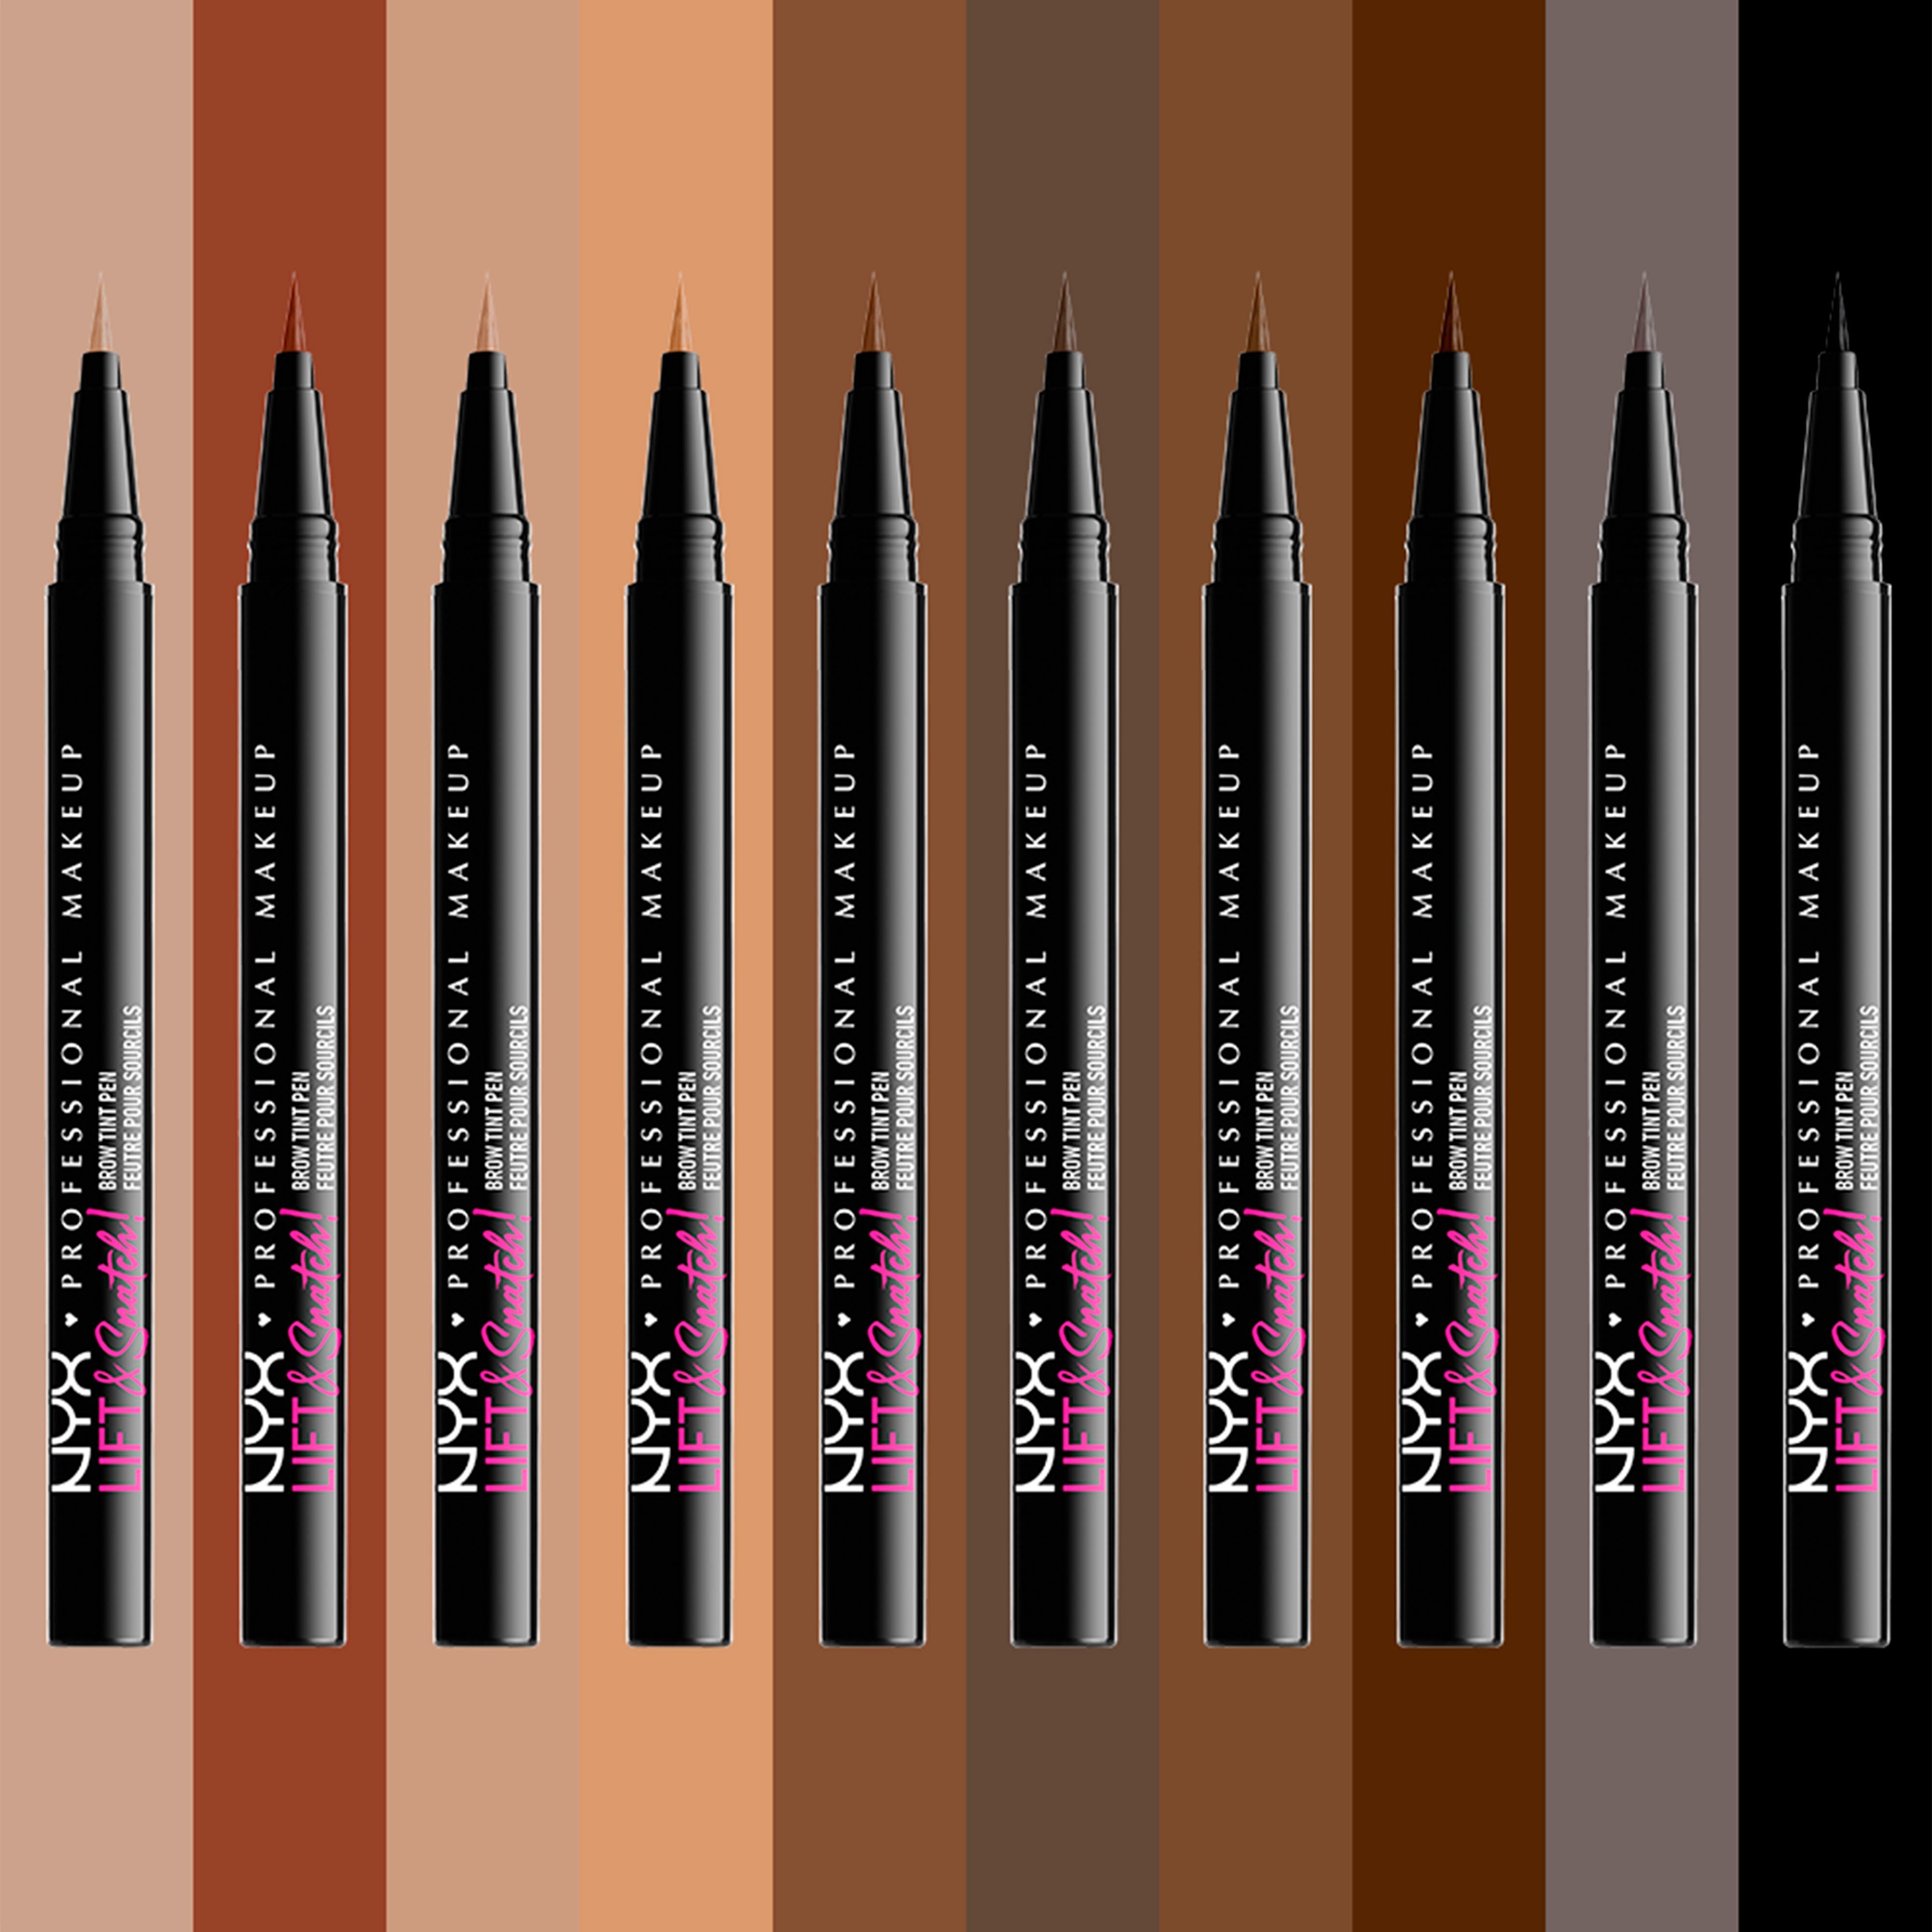 Tint Makeup & Lift ash Brow NYX brown Augenbrauen-Stift Professional Pen Snatch